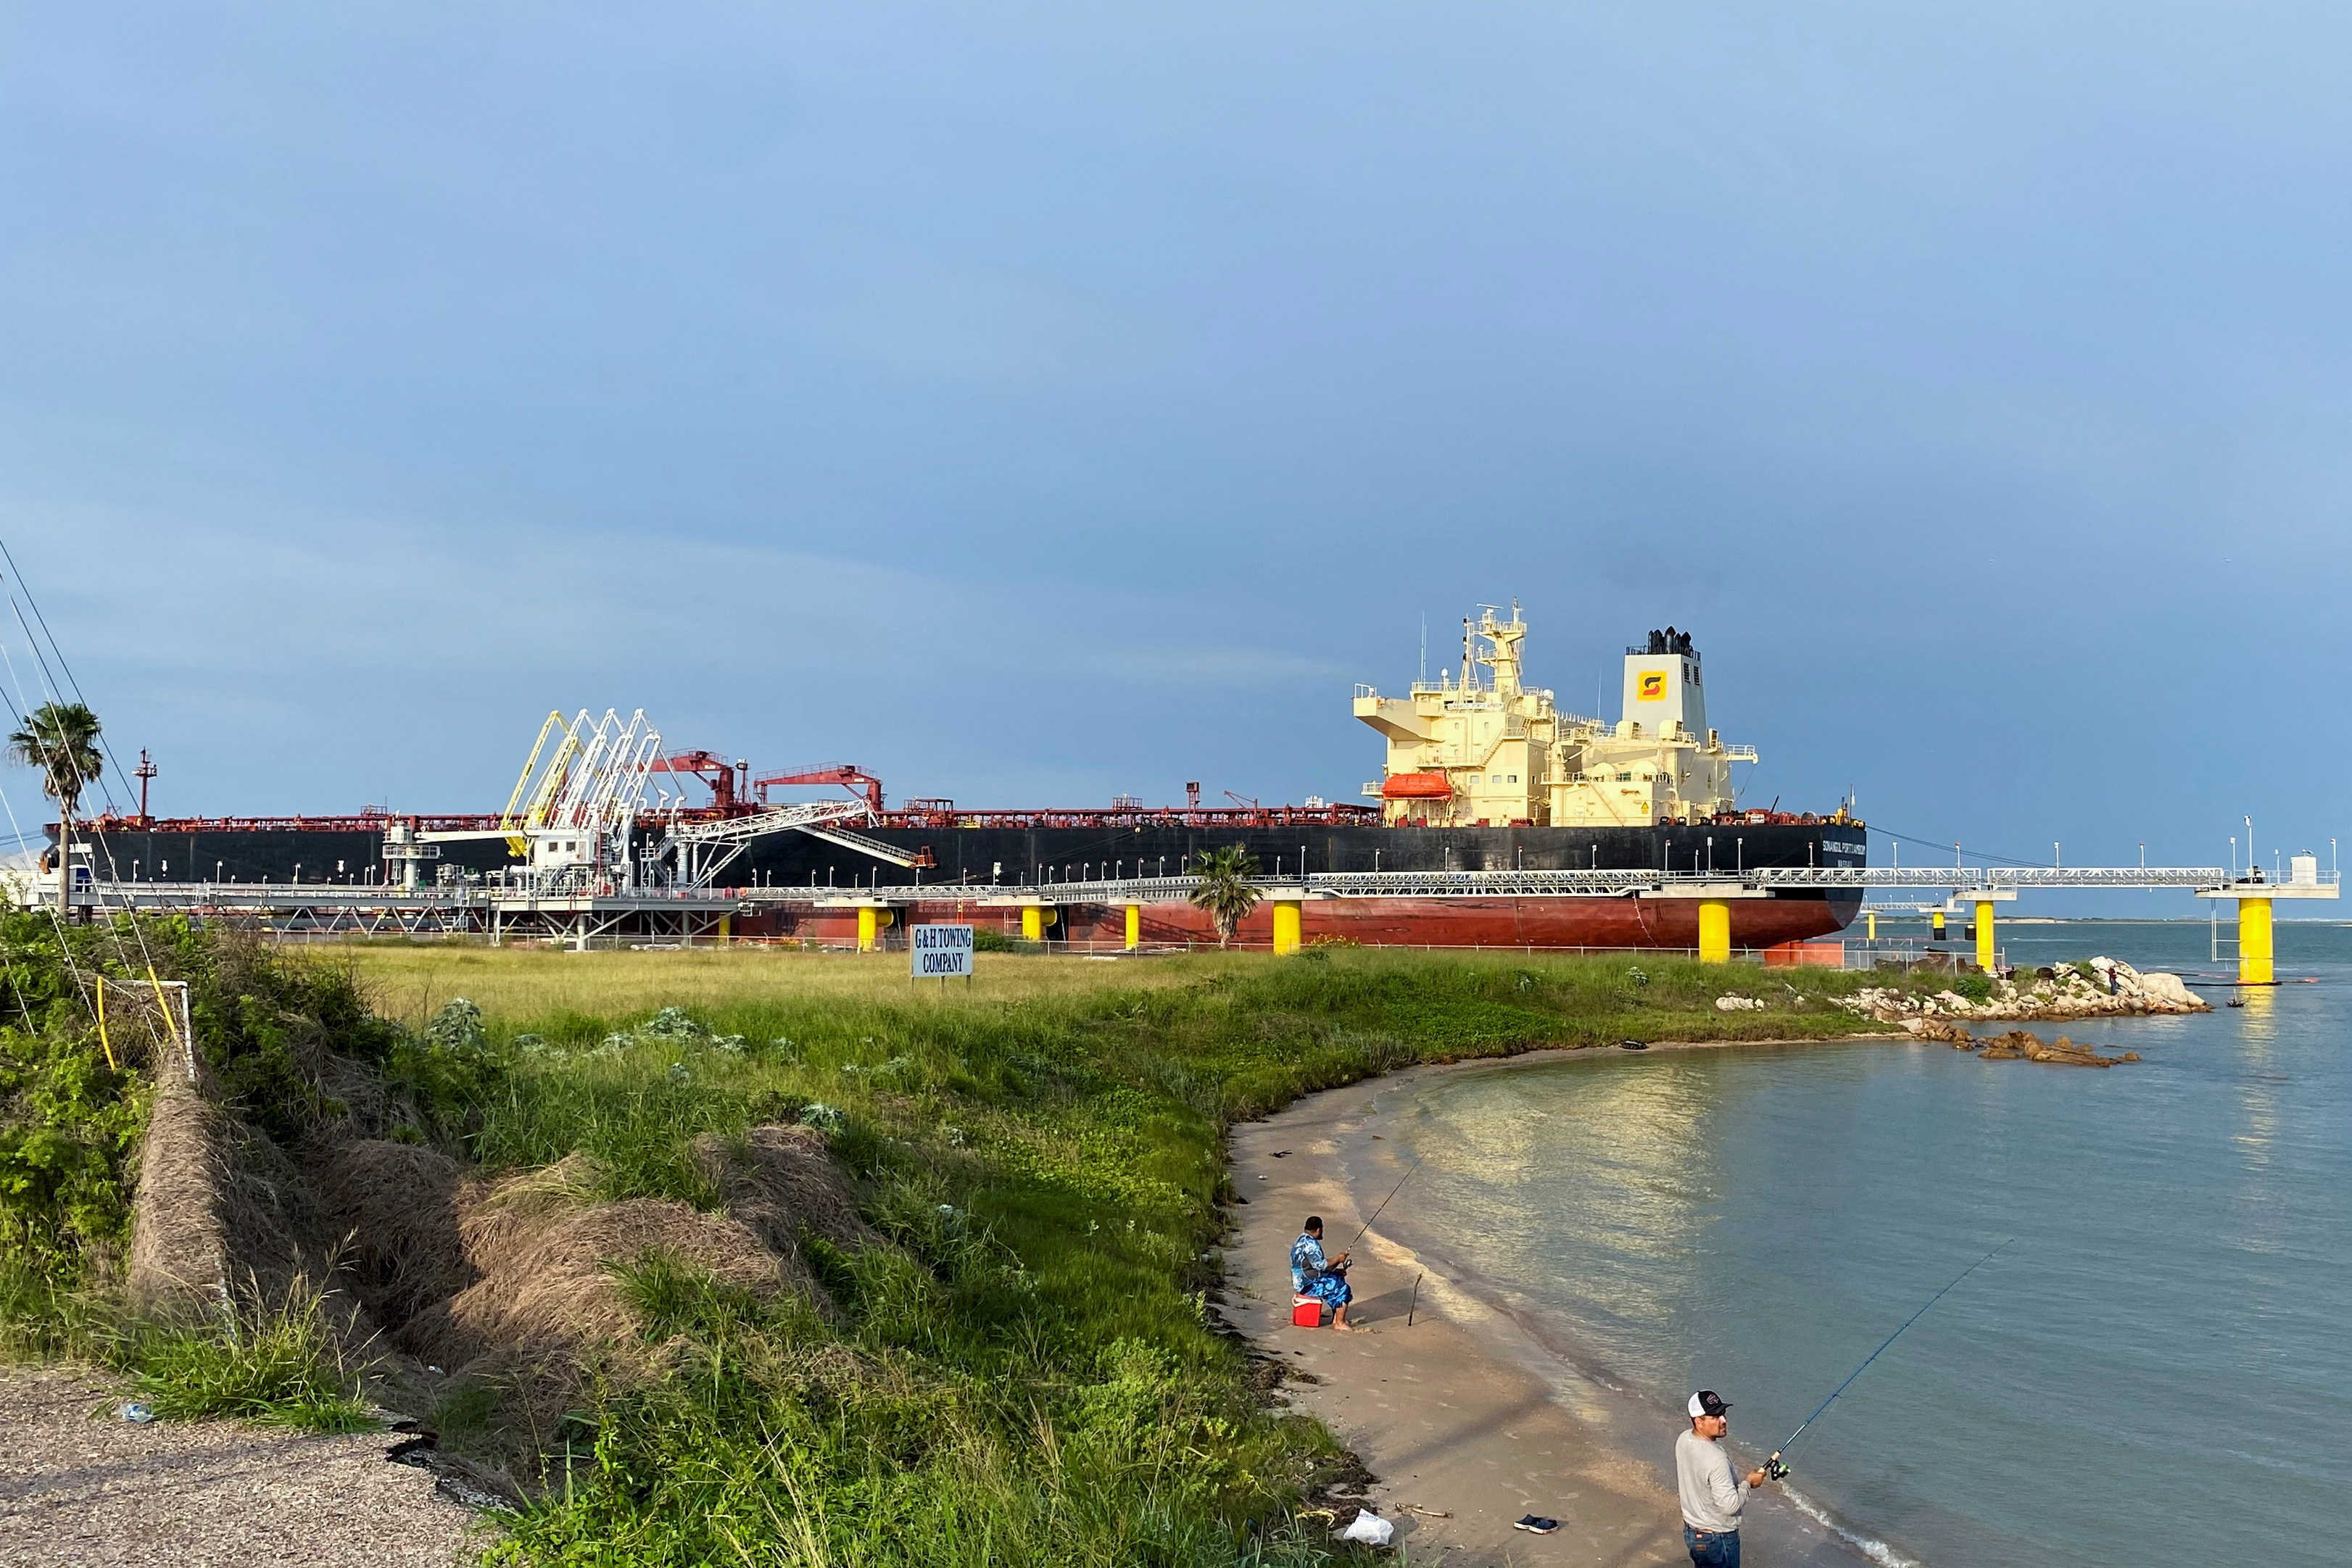 Oil tanker Sonangol Porto Amboim is docked at the South Texas Gateway terminal in Ingleside